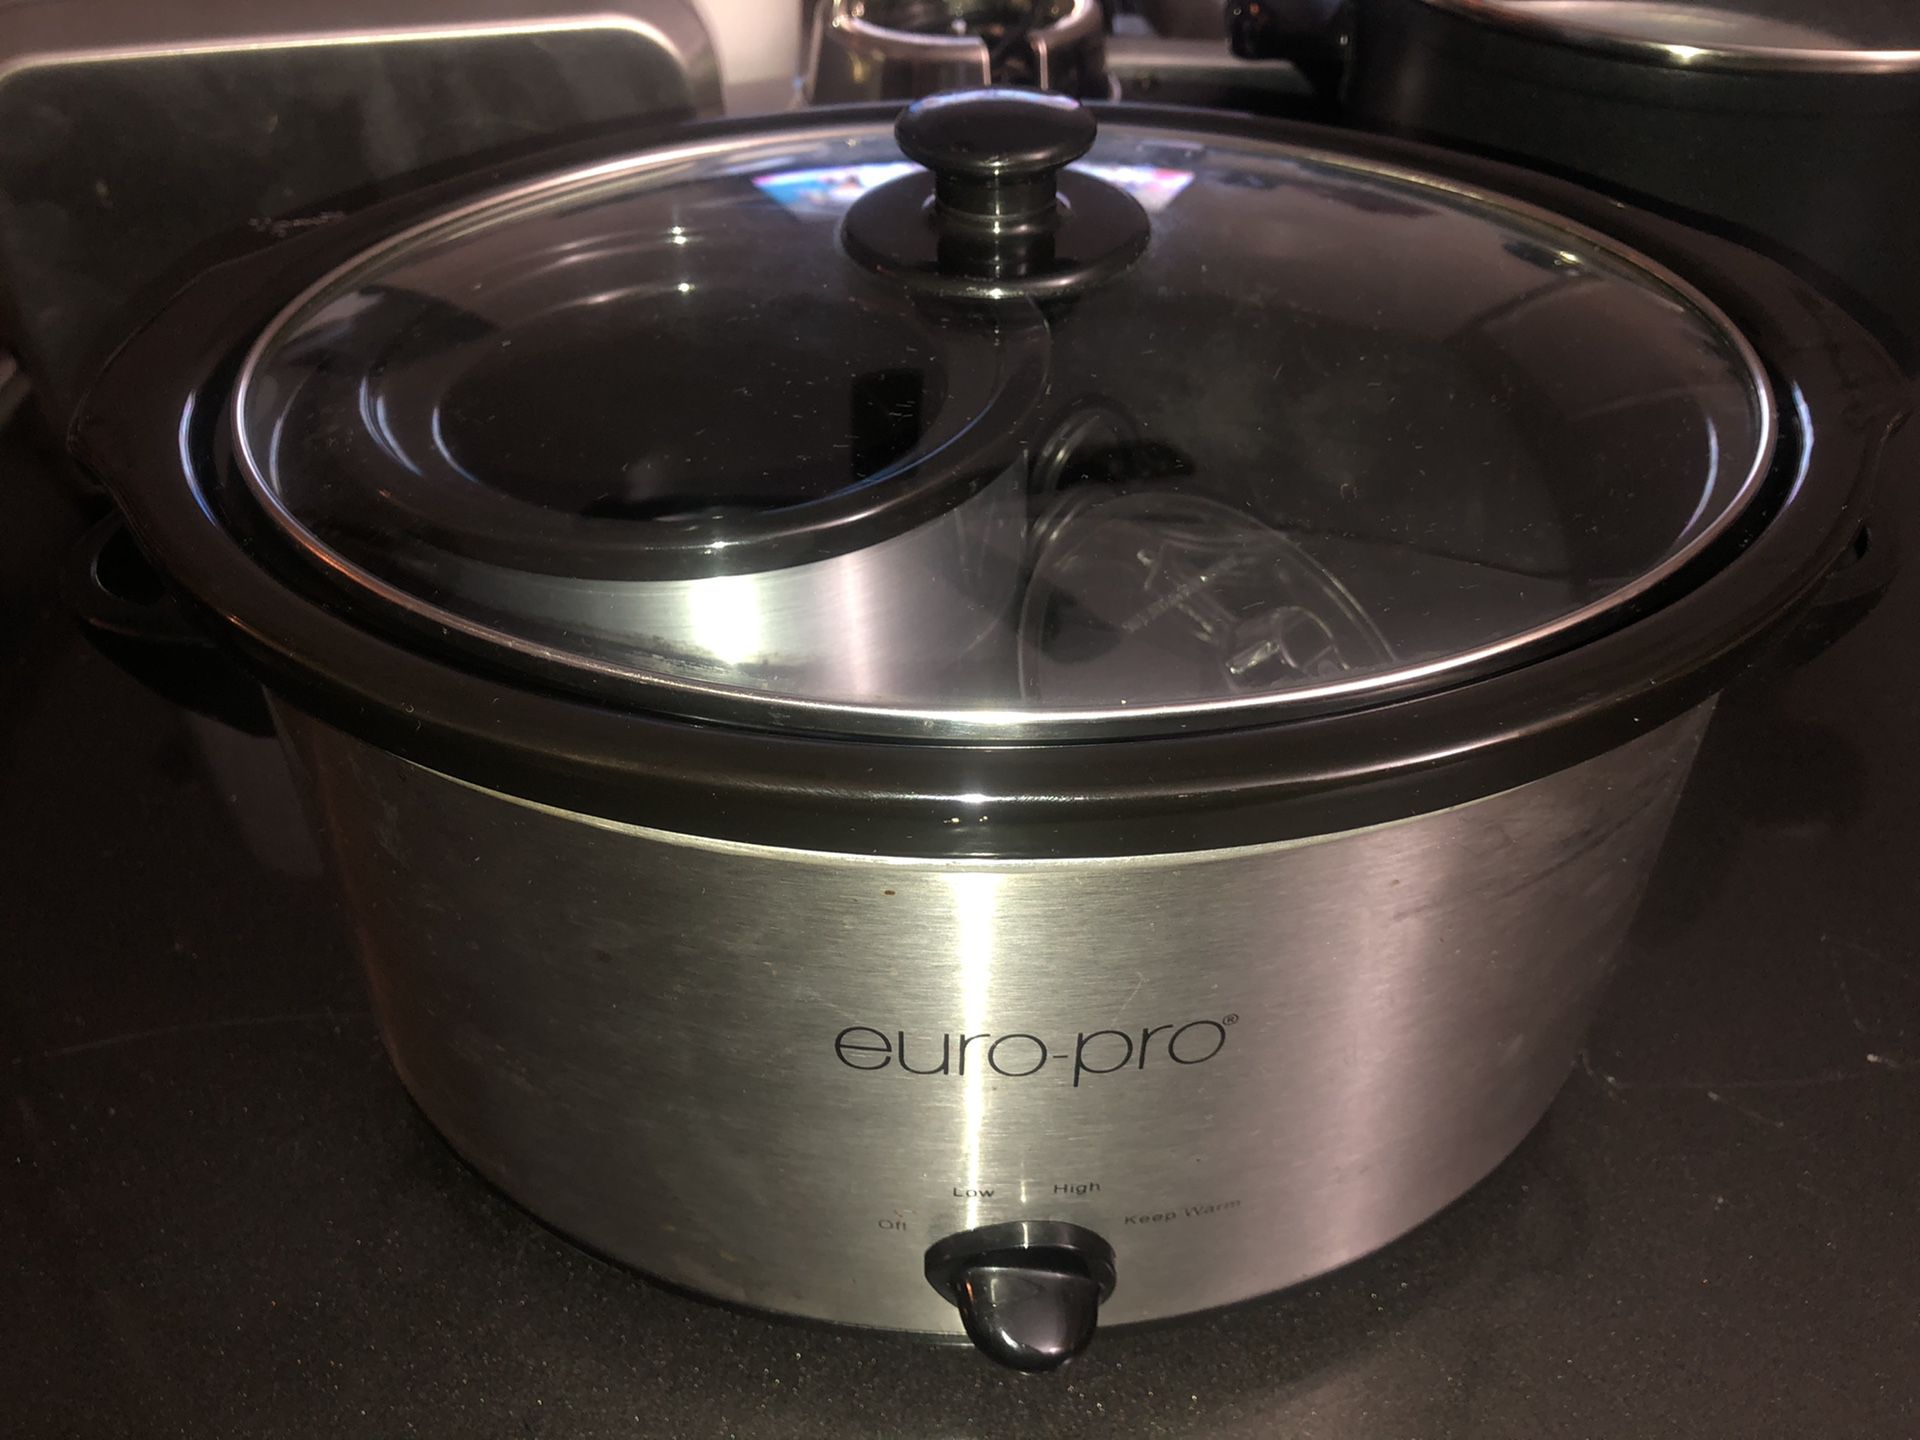 Euro-Pro 6-Quart Slow Cooker w/ Mini Cooker (Crock-Pot)